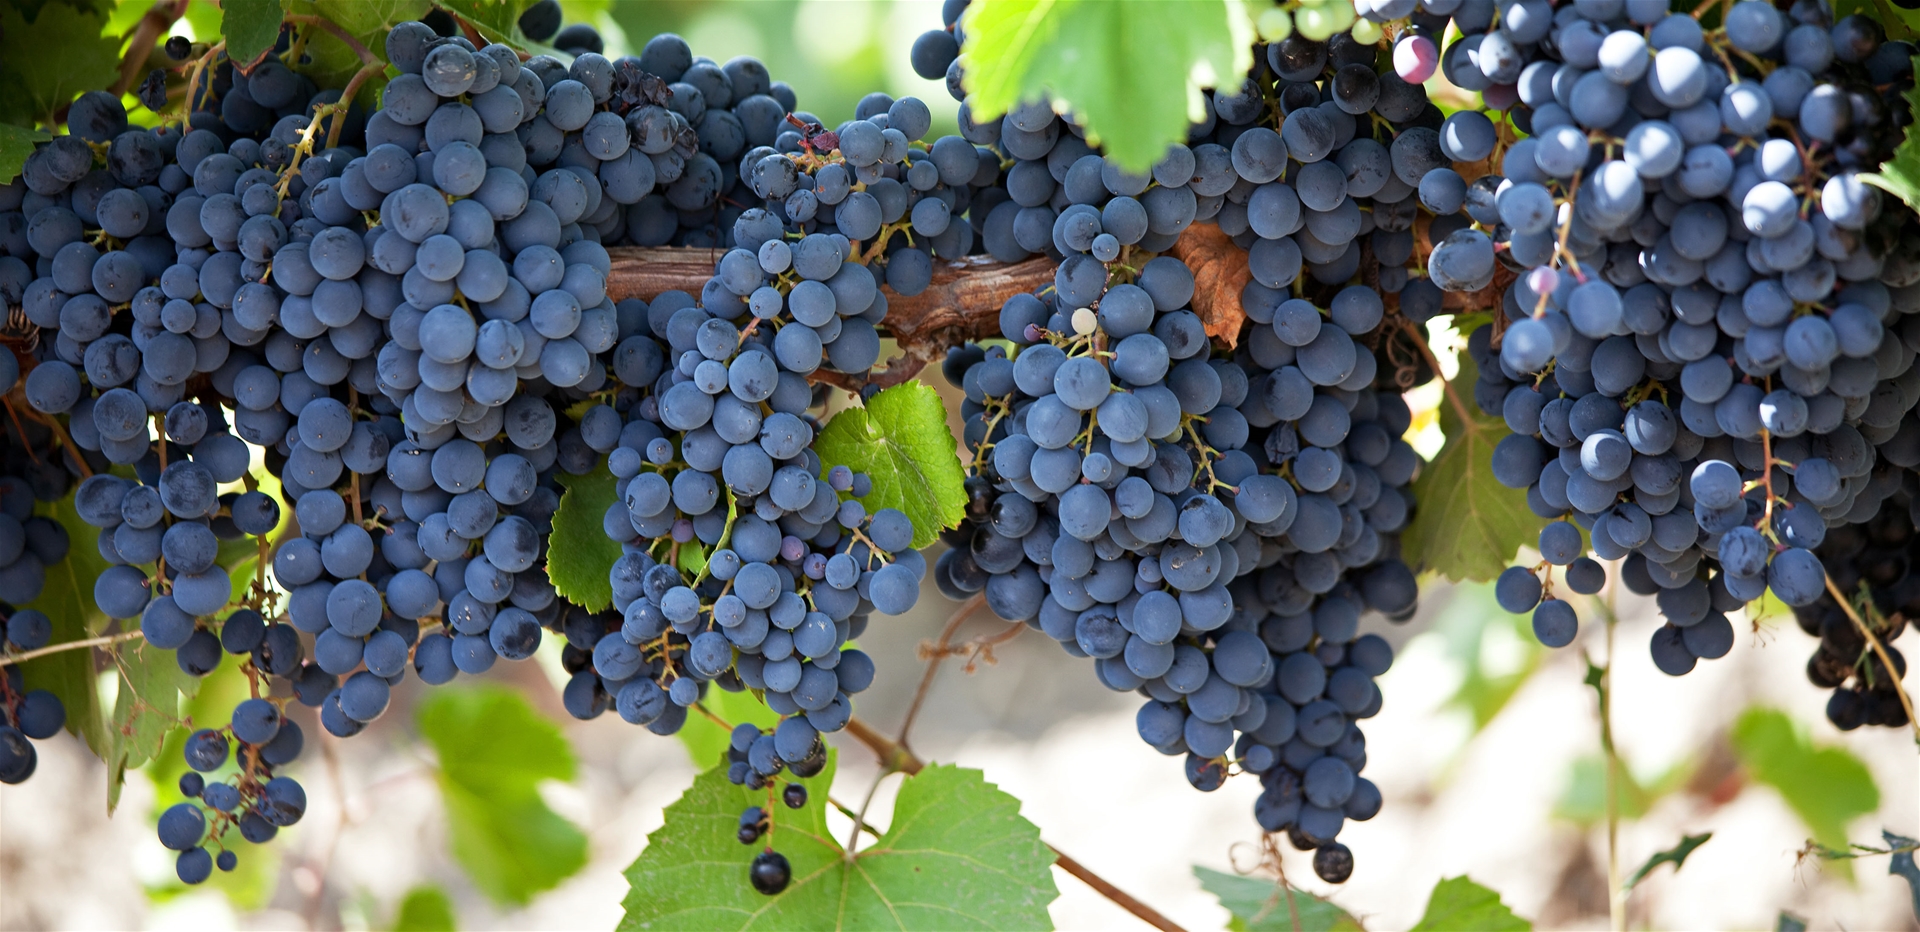 Ripe wine grapes on the vine.